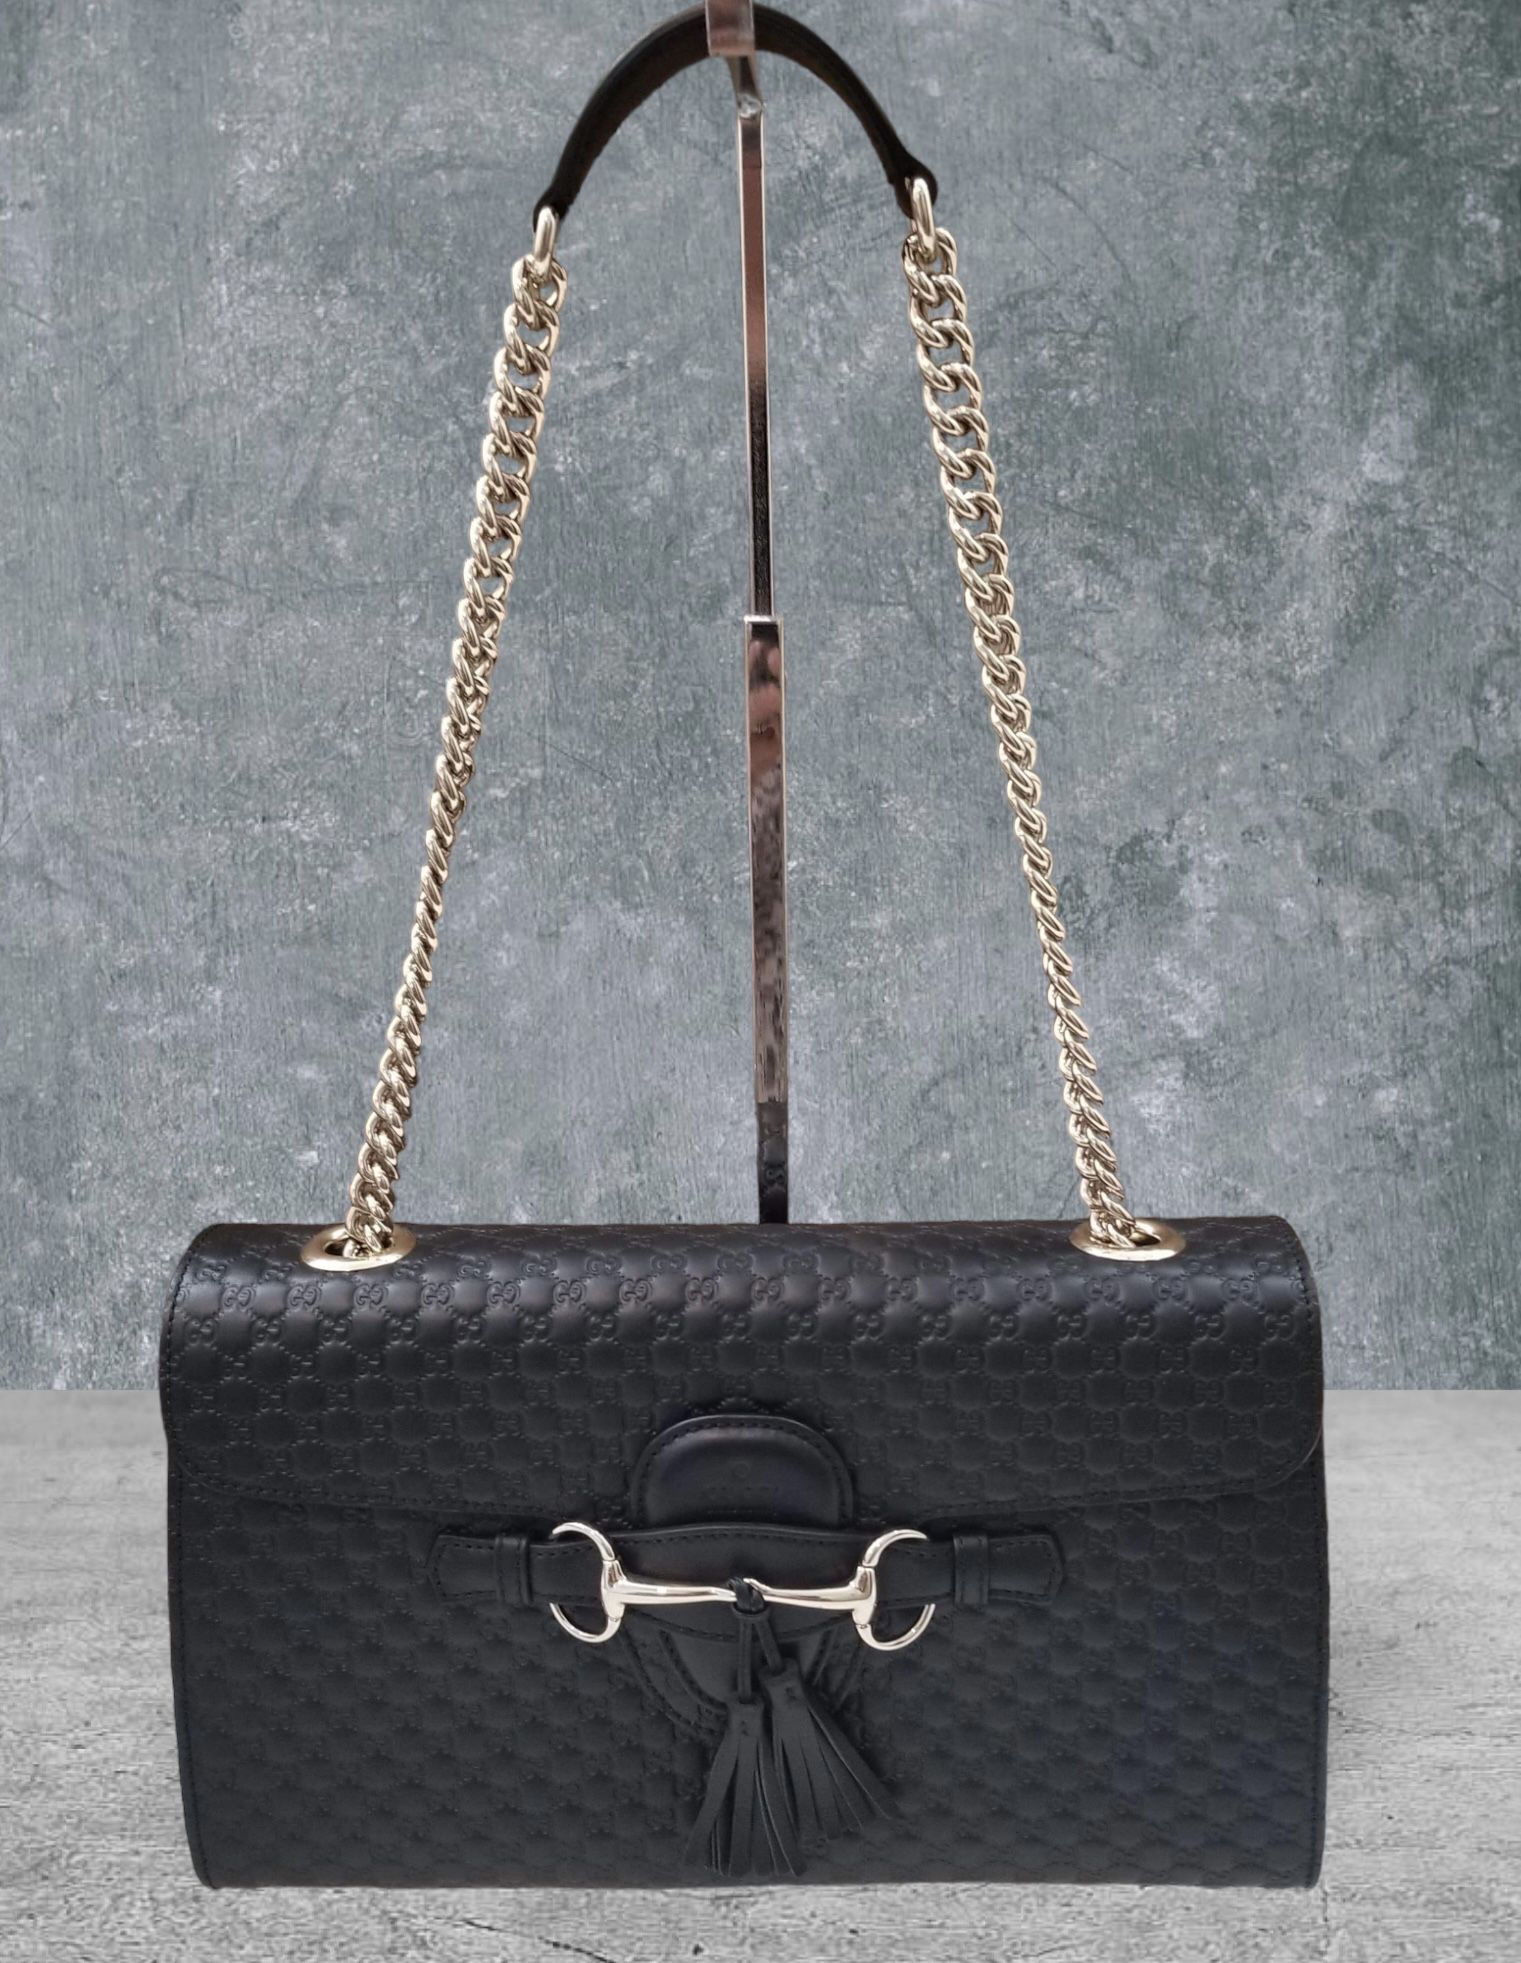 New Emily Guccissima Chain Shoulder Bag